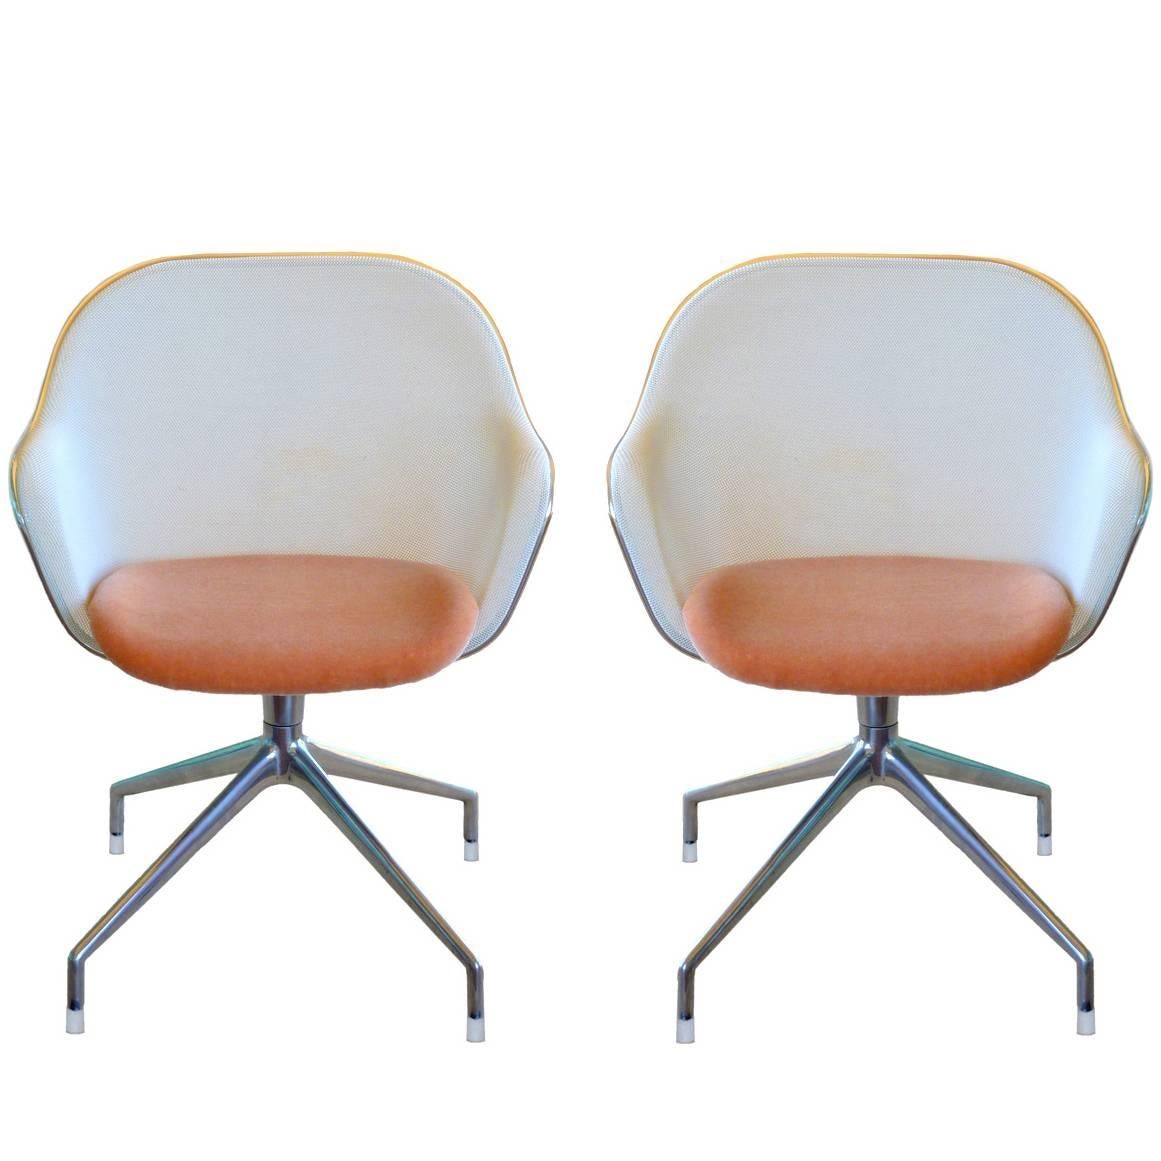 Pair of Iuta Chairs by Antonio Citterio for B&B Italia For Sale